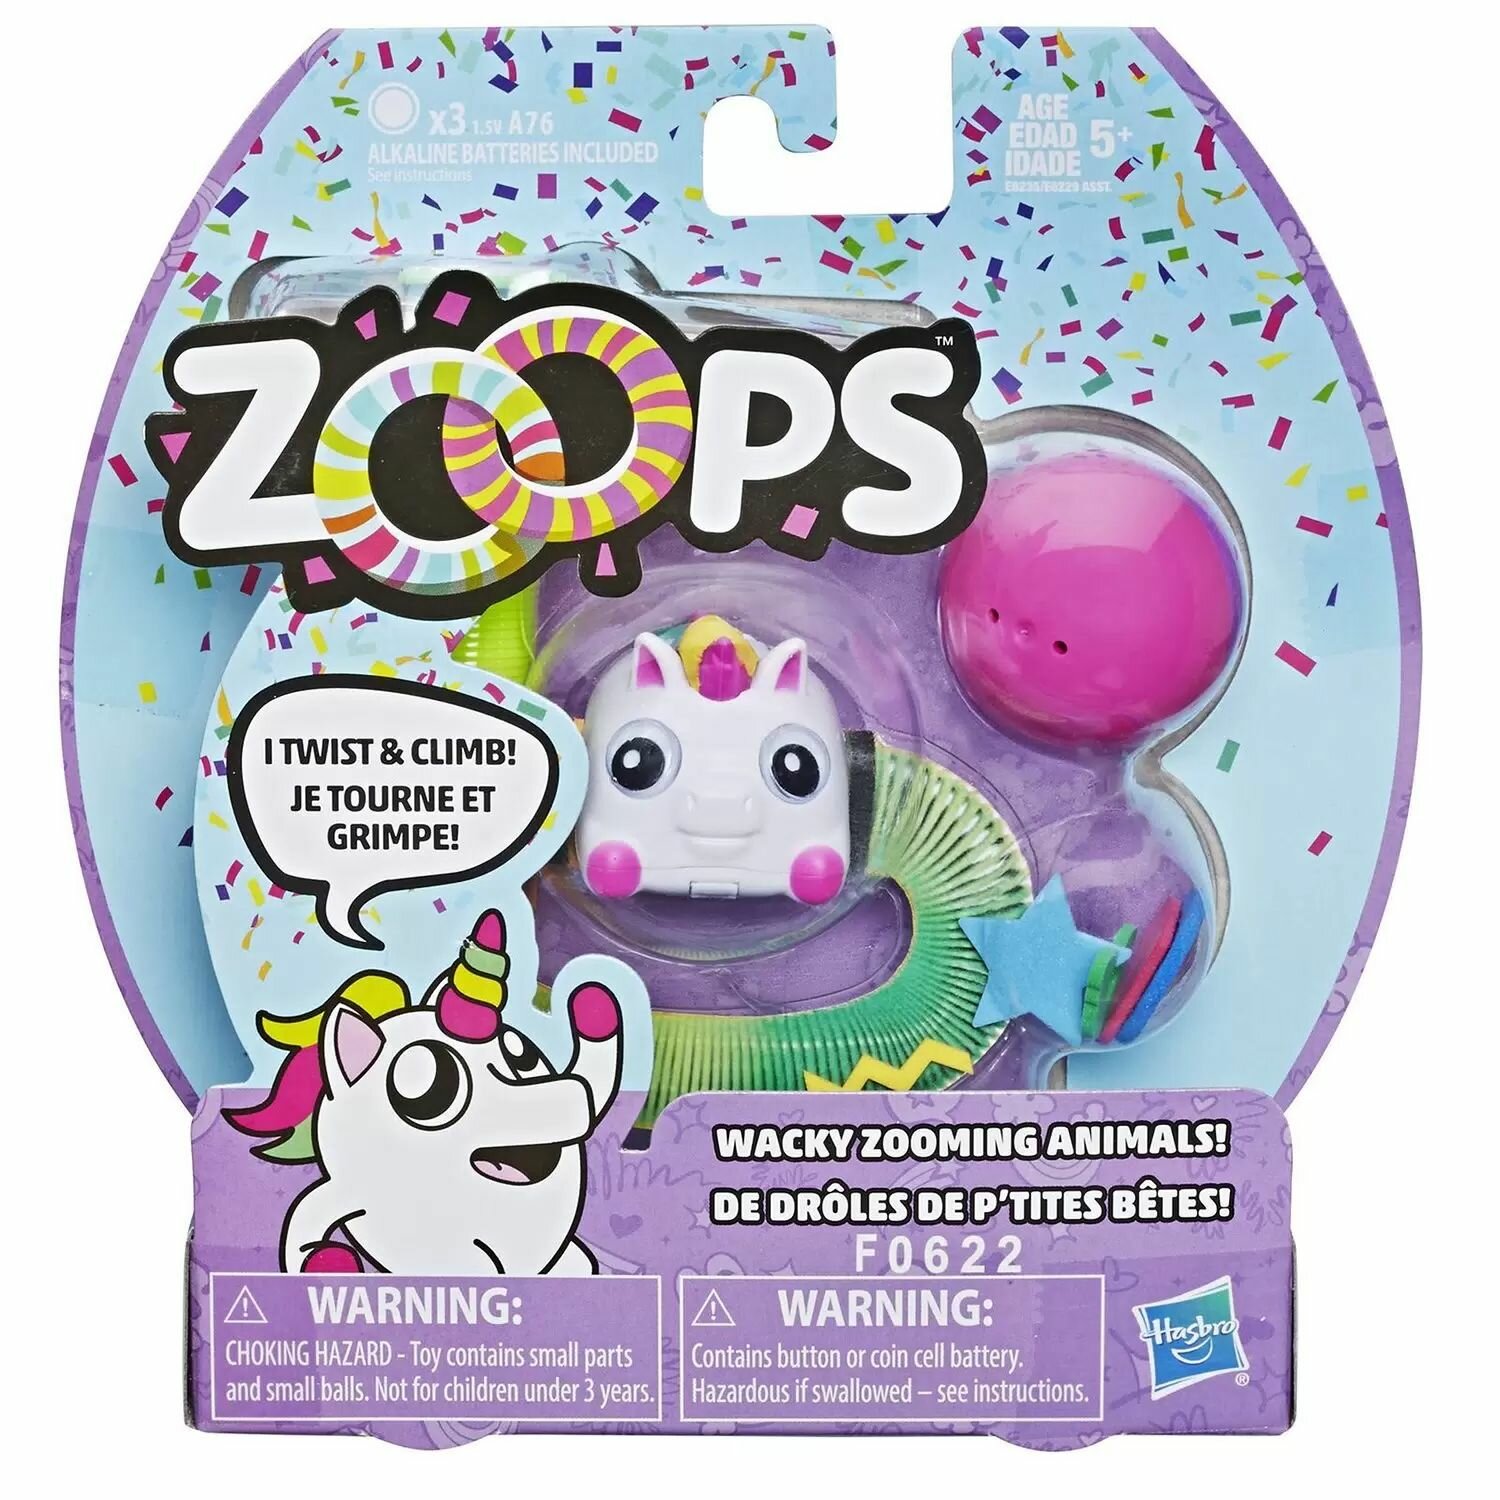 Hasbro - Игрушка браслет Zoops №4 единорог